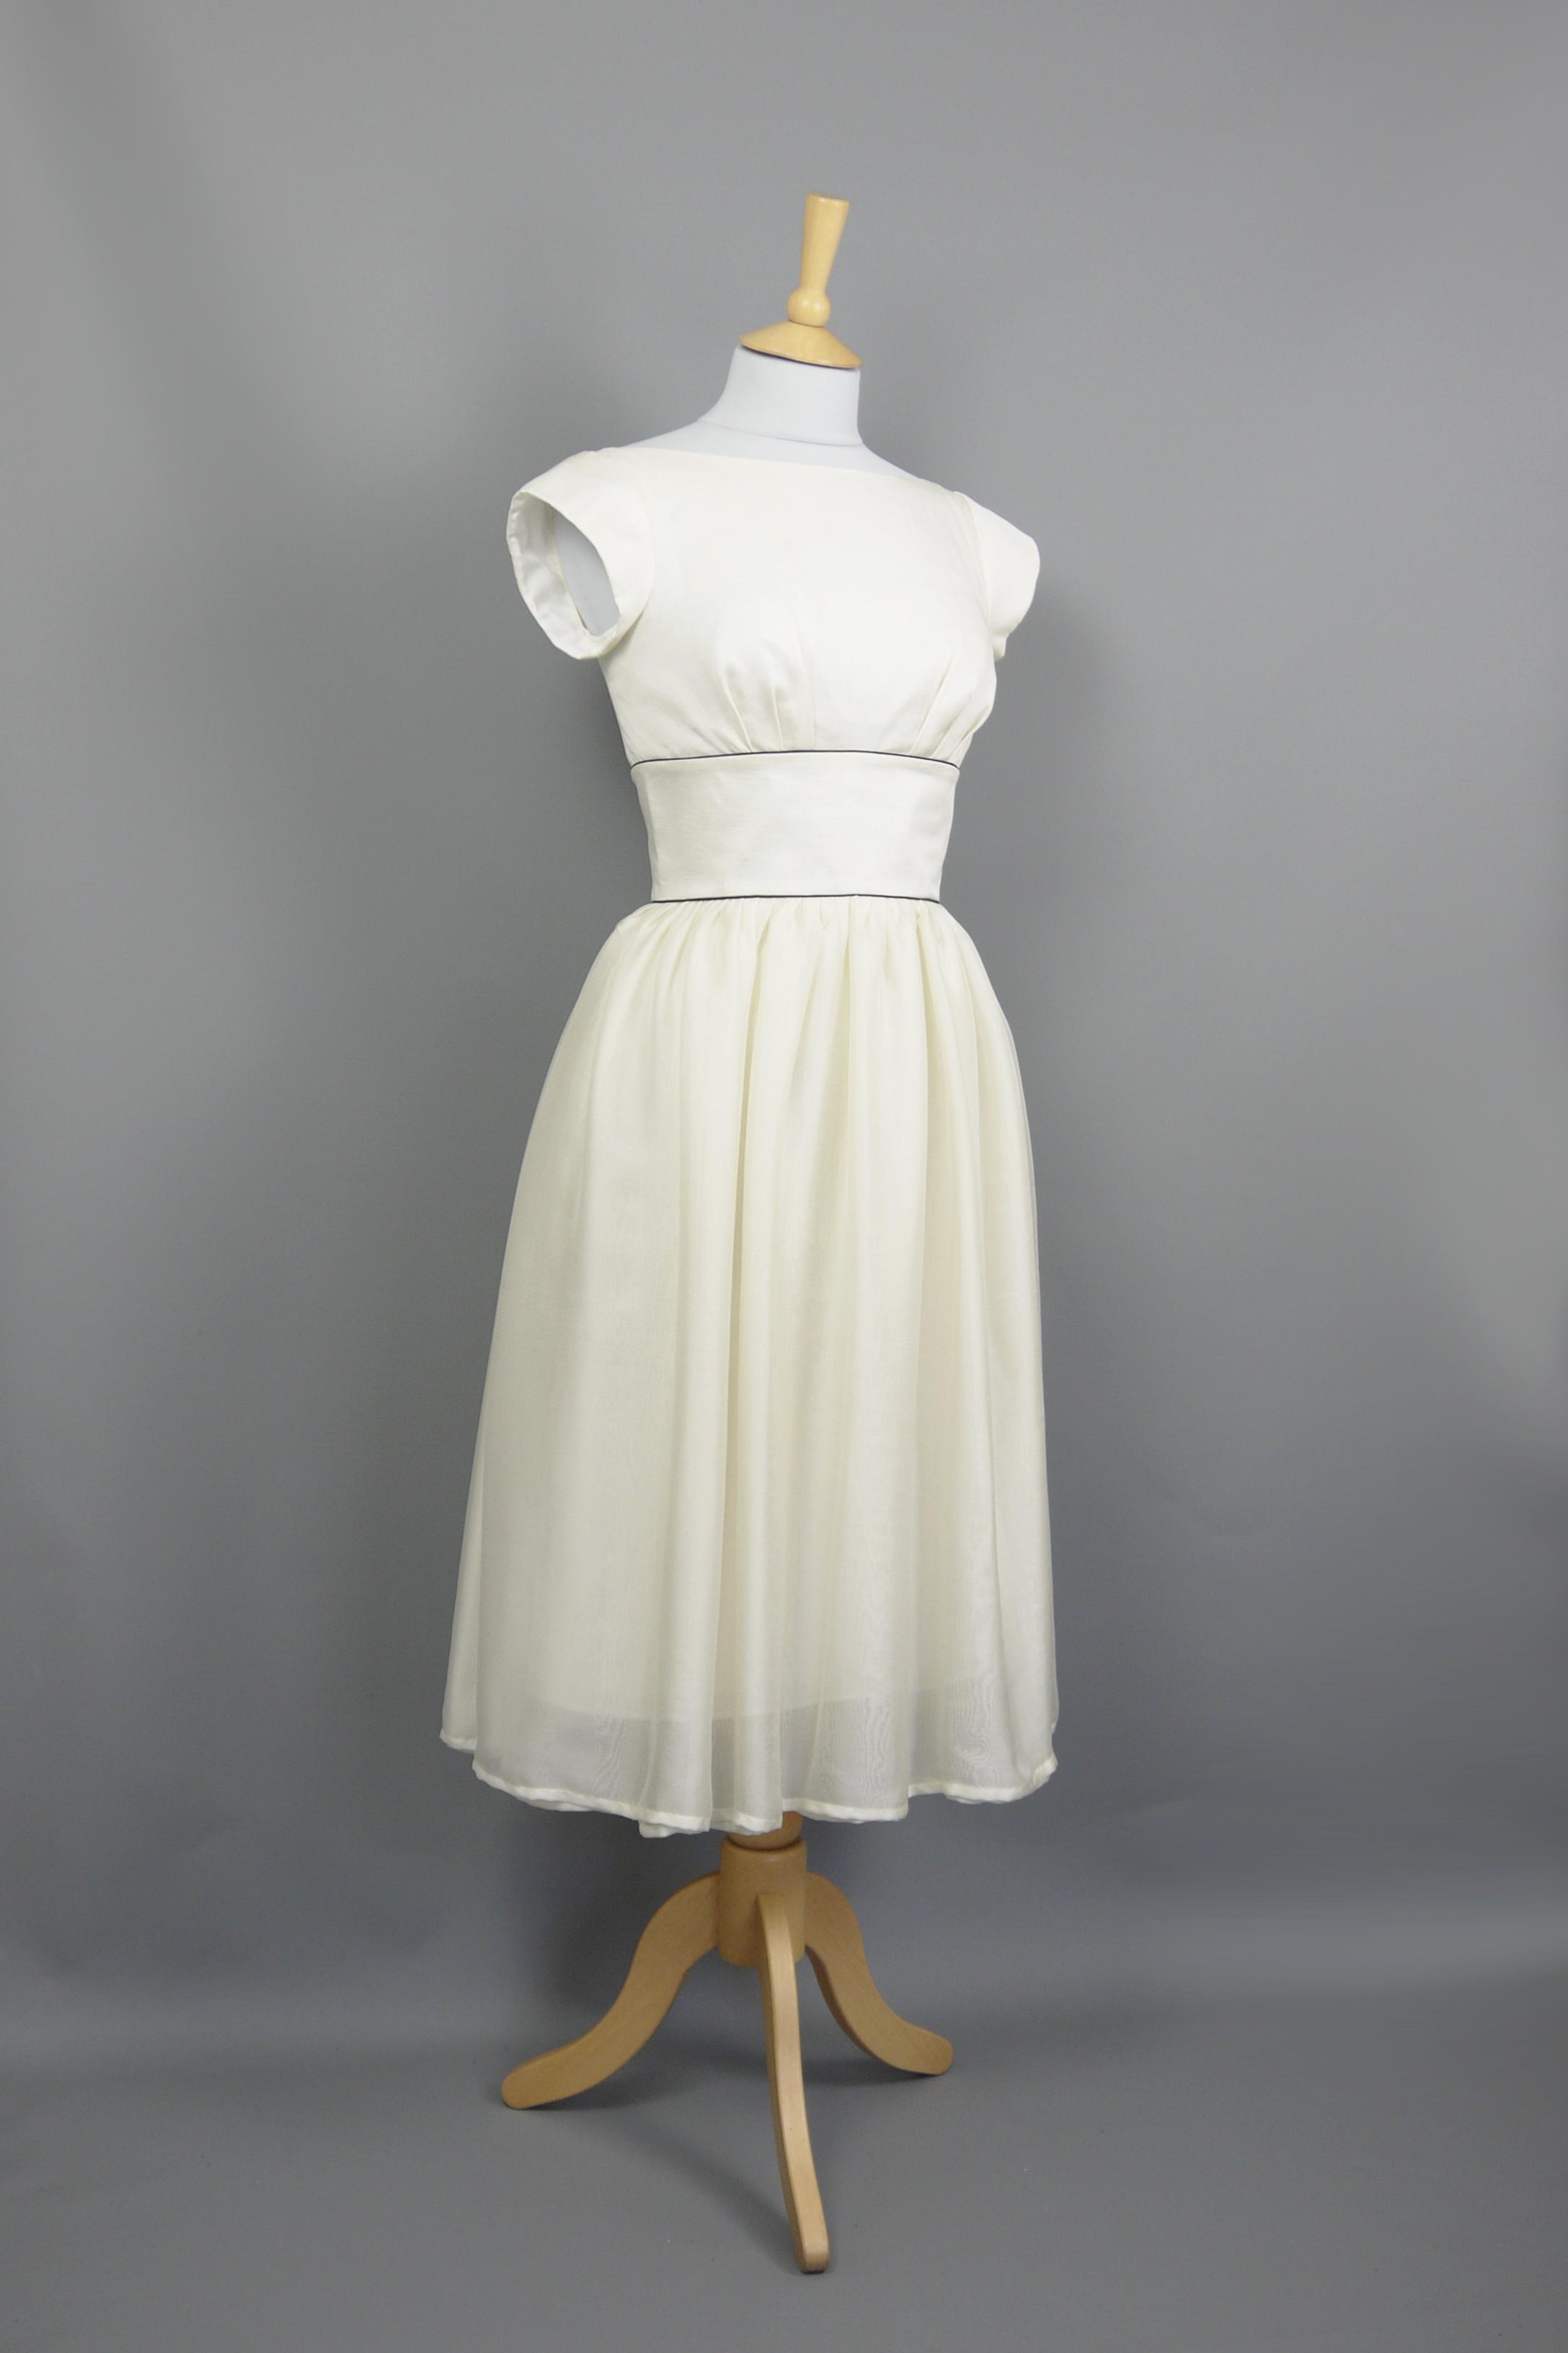 Size UK 10 - Paris Wedding Dress in Ivory Silk Chiffon